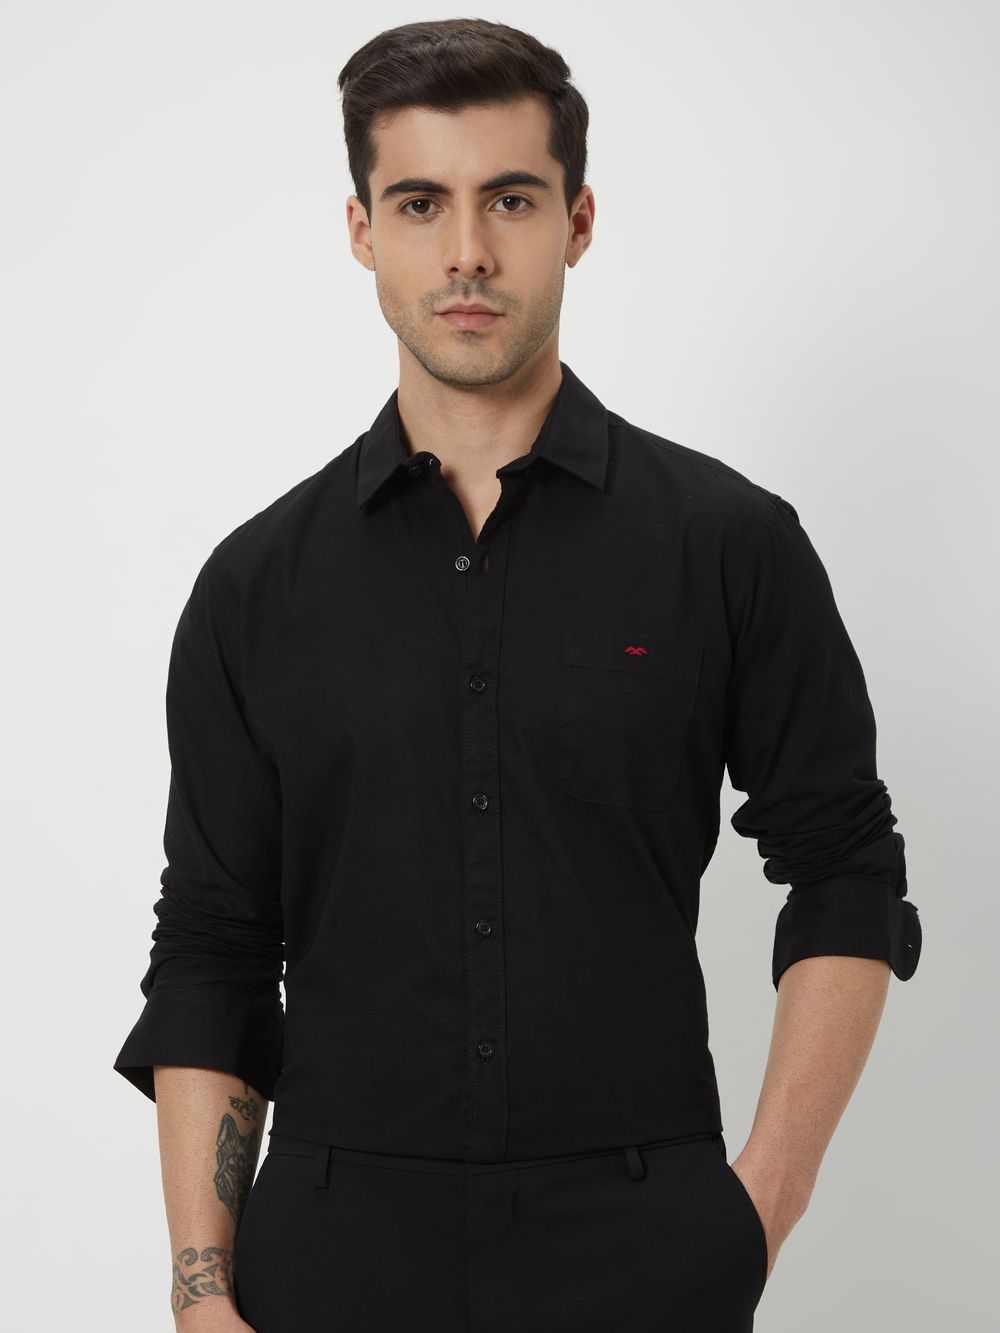 Black Slim Fit Casual Shirt